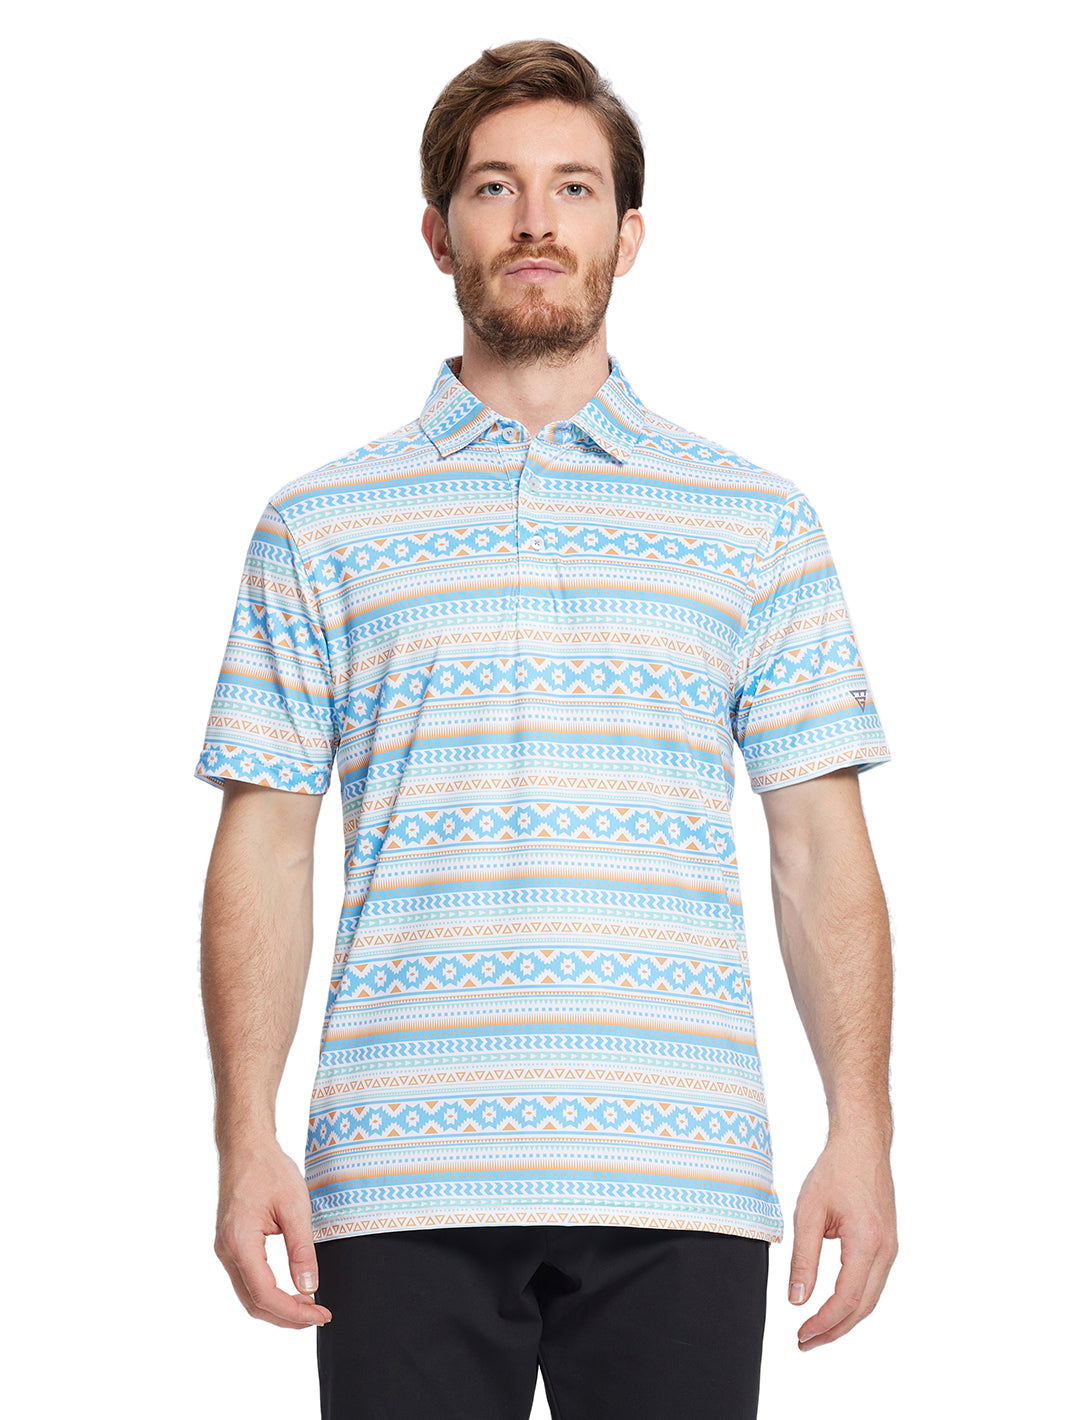 Men's Printed Golf Shirts-Blue Ethnic